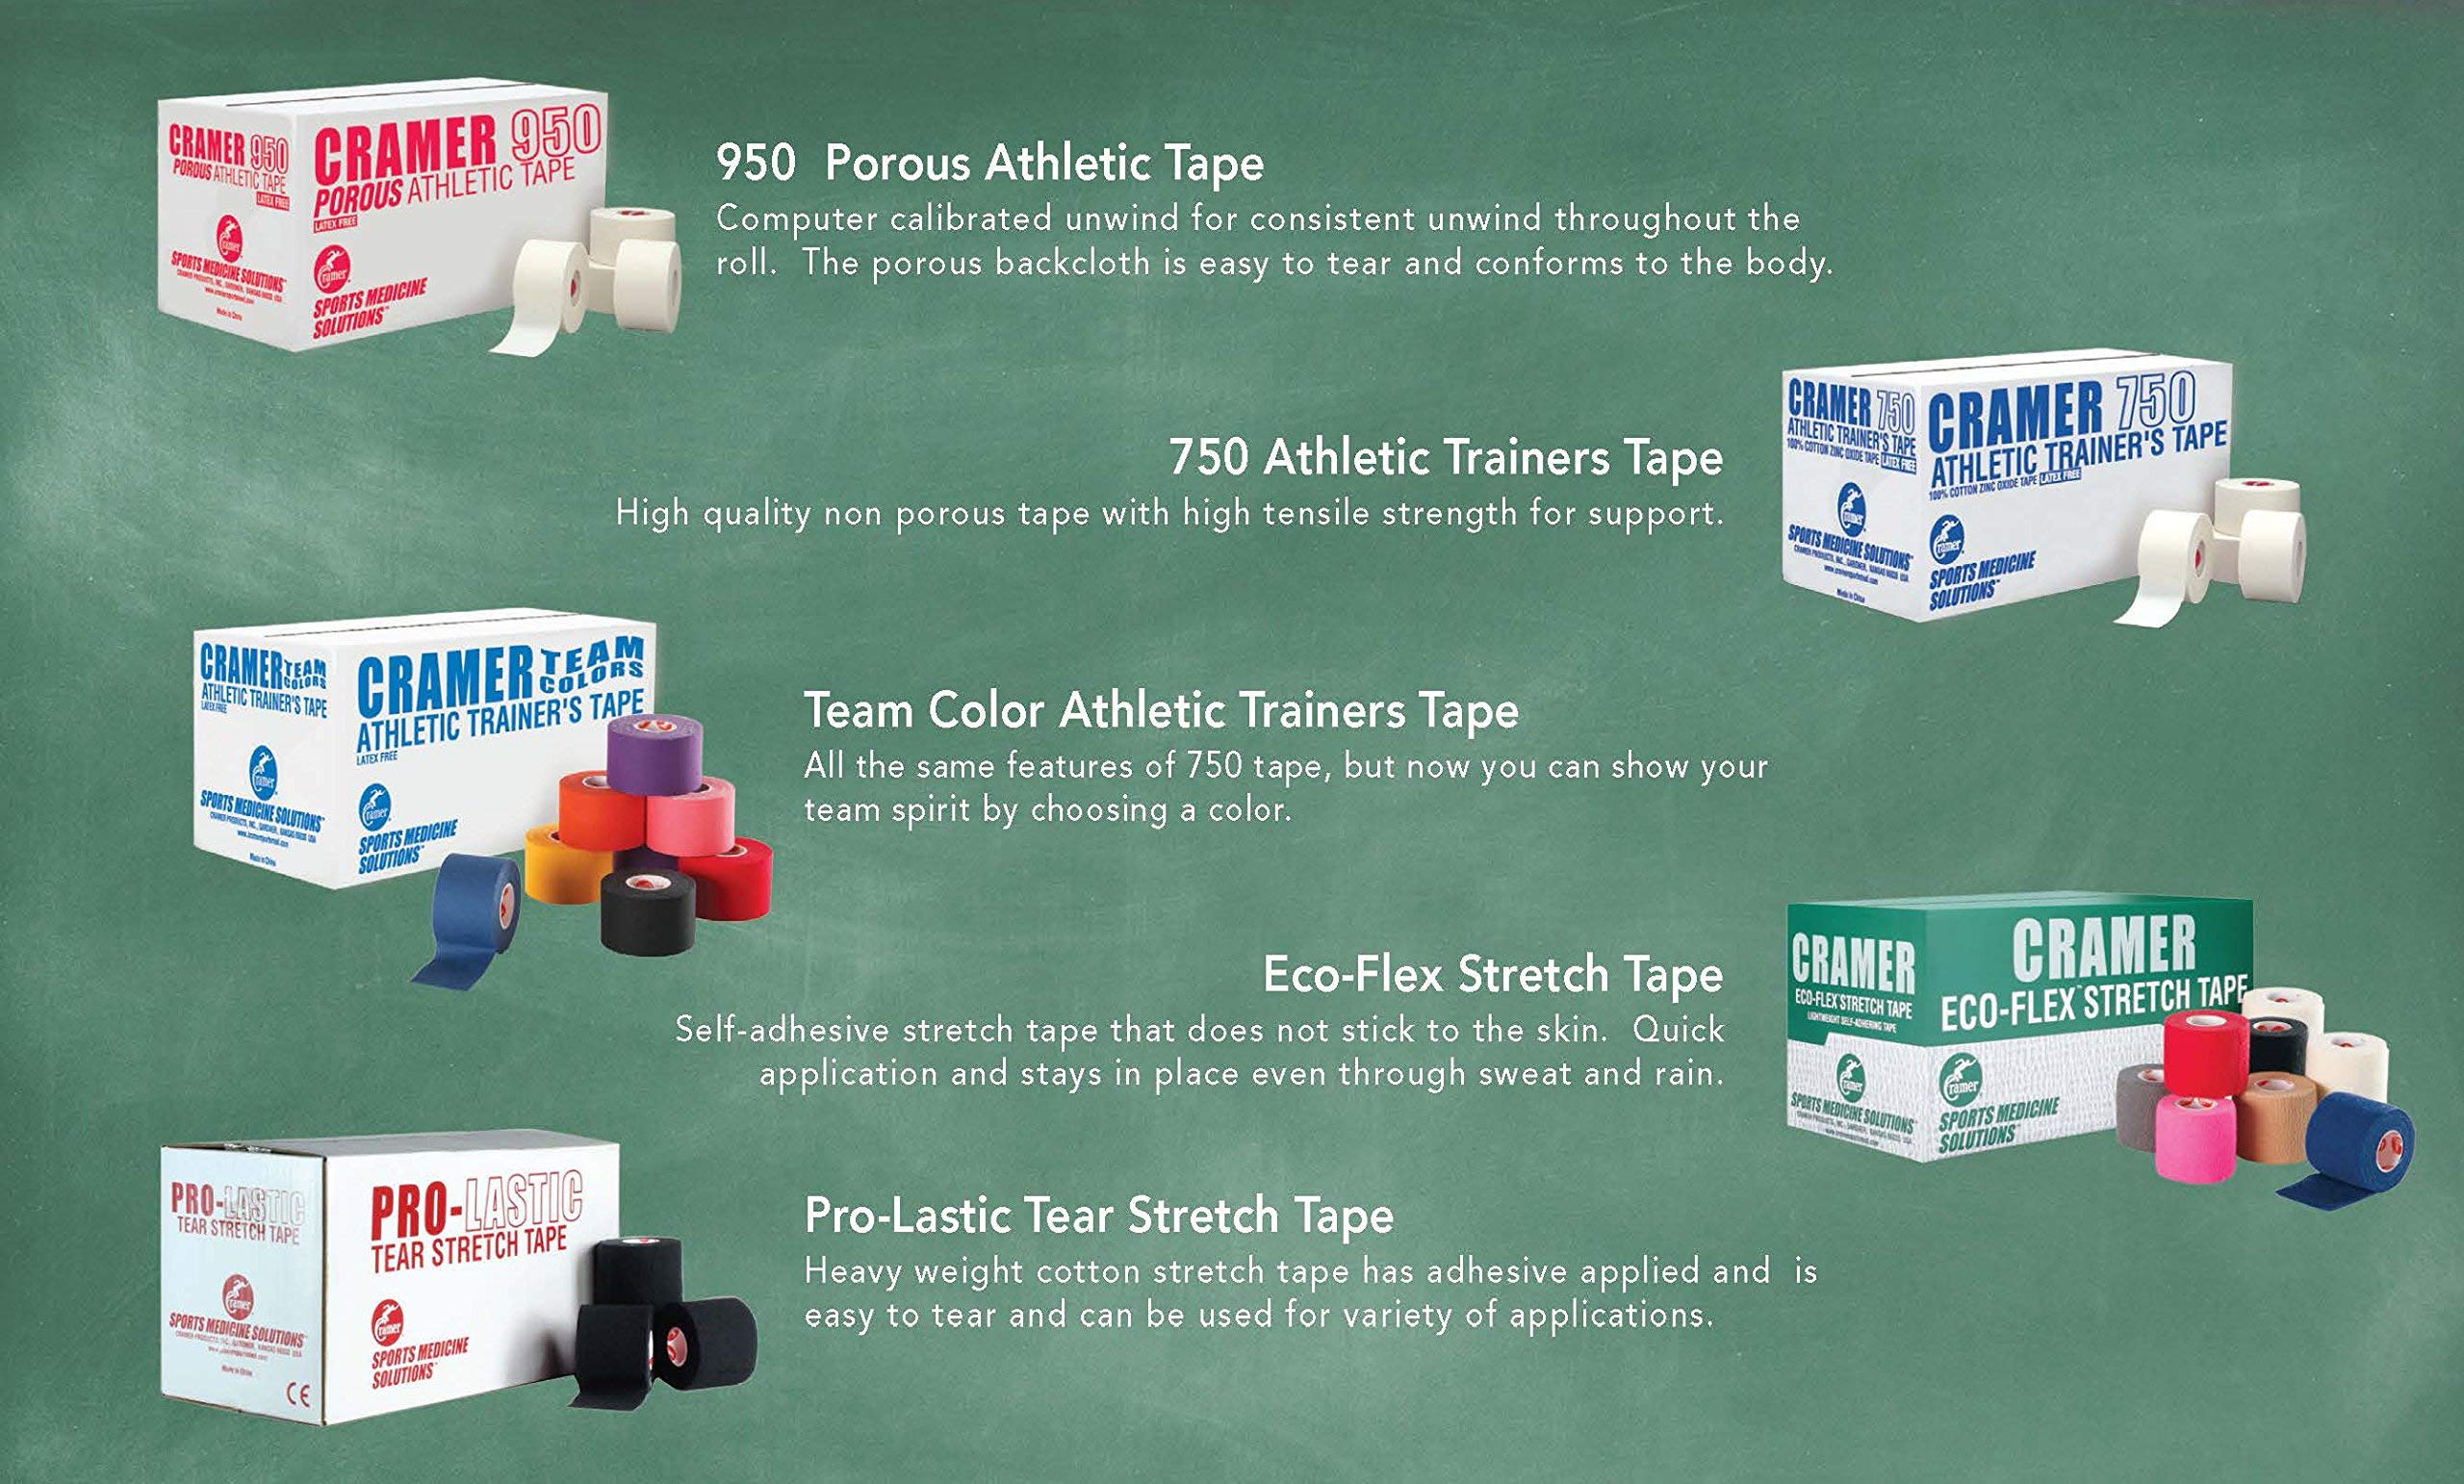 Cramer Eco-Flex Self-Stick Stretch Tape, Cohesive Tape, Flexible Elastic Sports Tape, Athletic Training Supplies, Easy Tear Self-Adherent Bandage Wrap, Bulk Cases, 6 Yard Rolls, Compression Tape